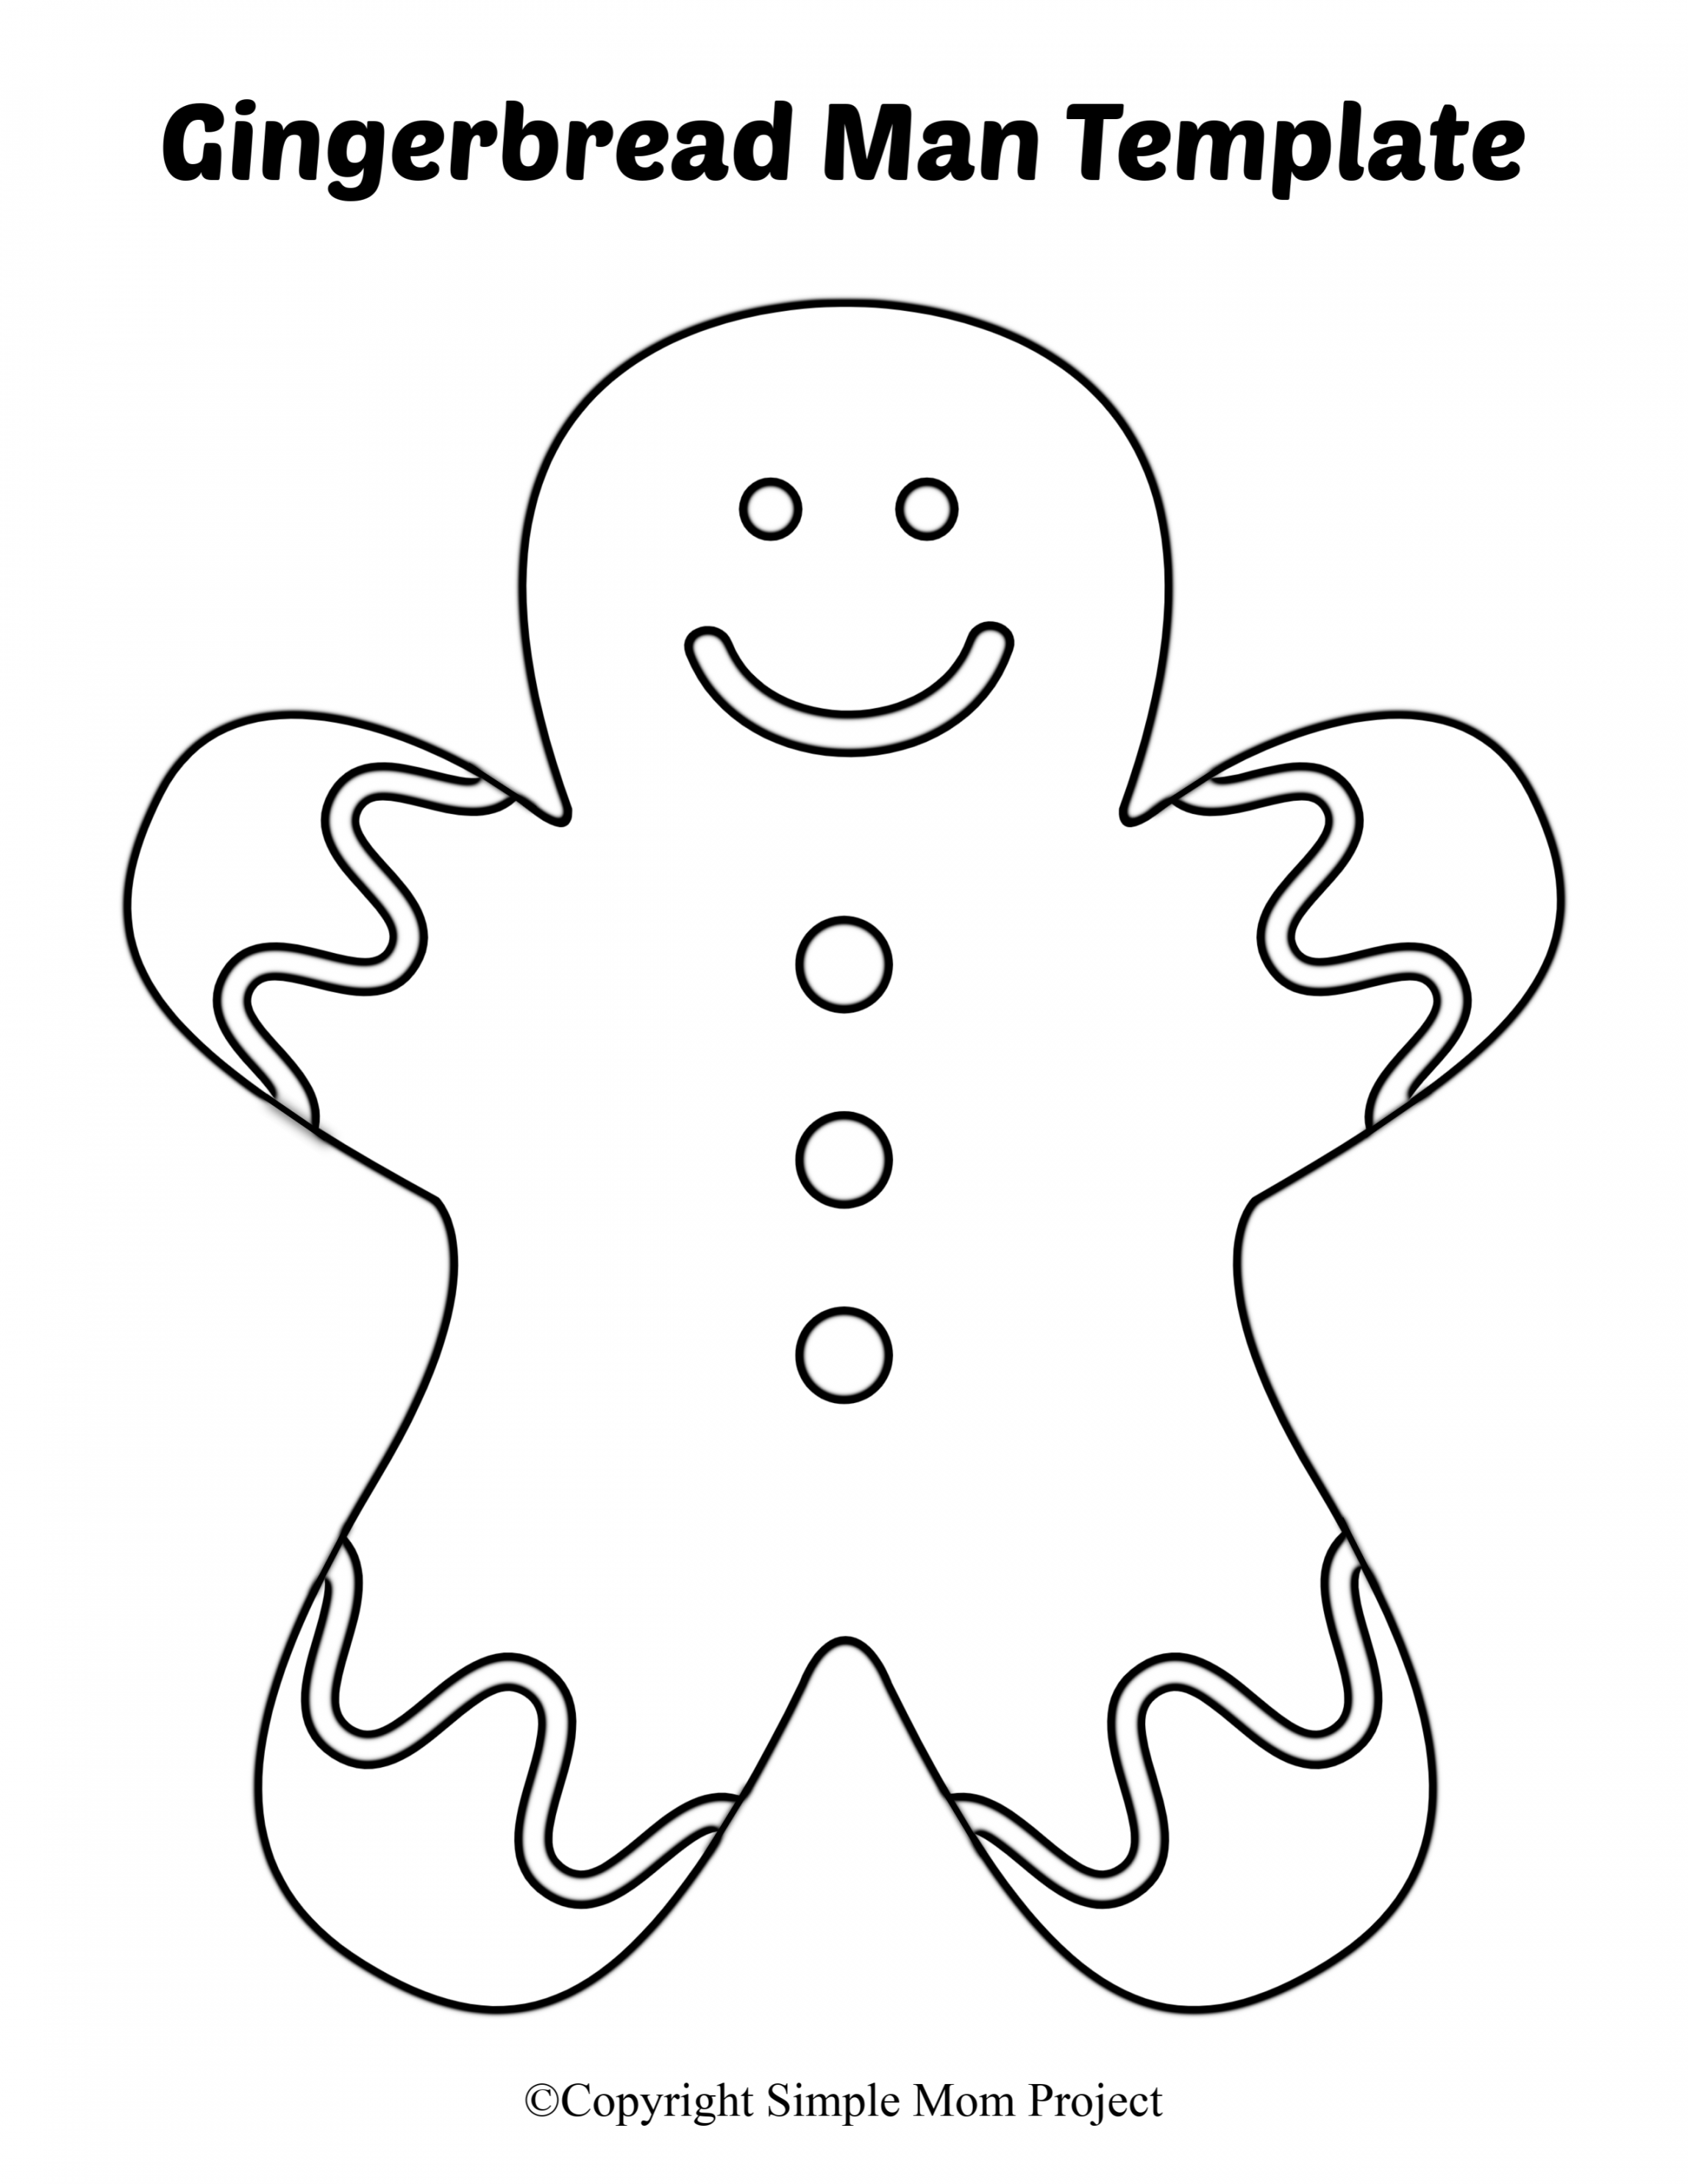 Free Printable Small Snowflake Templates  Gingerbread man  - FREE Printables - Free Printable Gingerbread Man Template